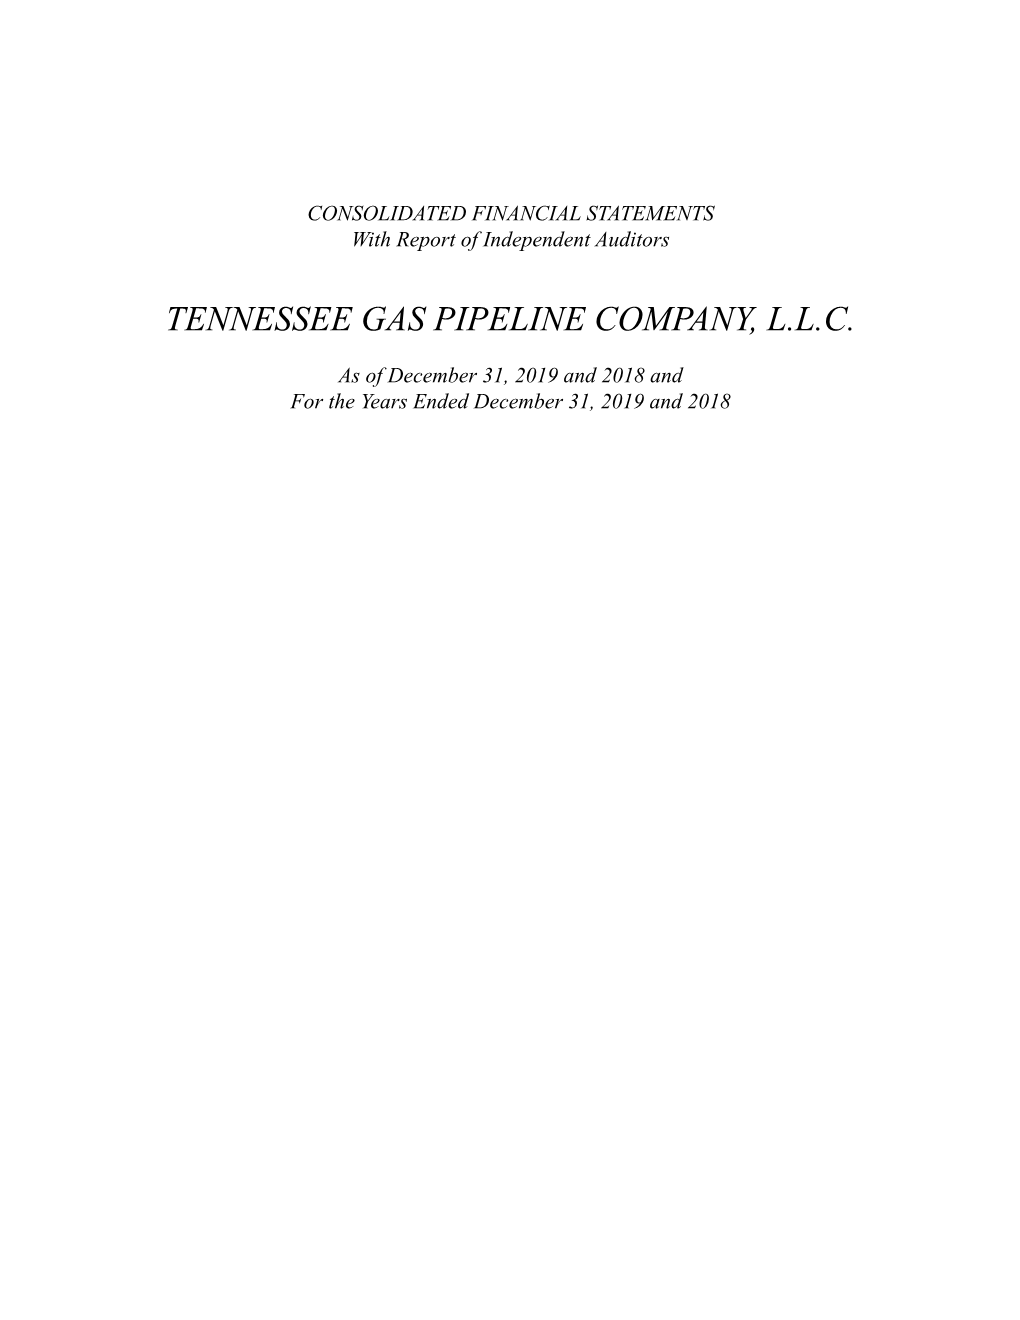 Tennessee Gas Pipeline Company, L.L.C